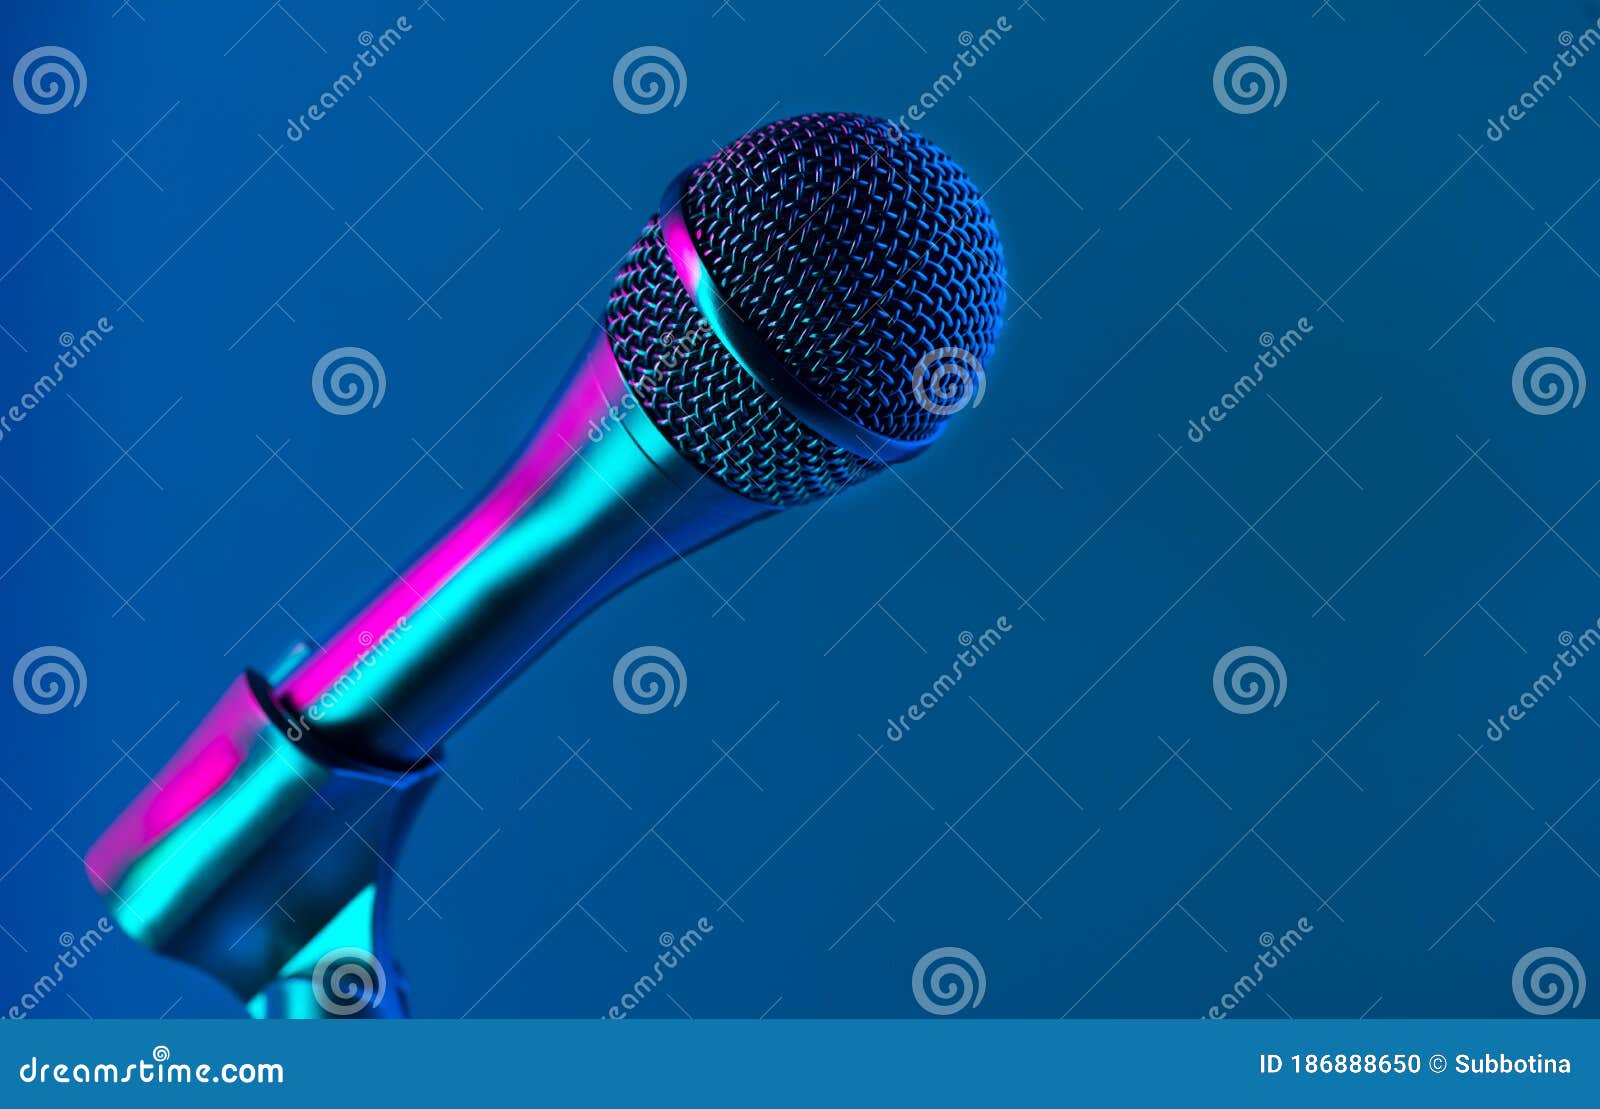 10 dulces de mano escenario karaoke OK micrófono micrófono burbuja de viento 